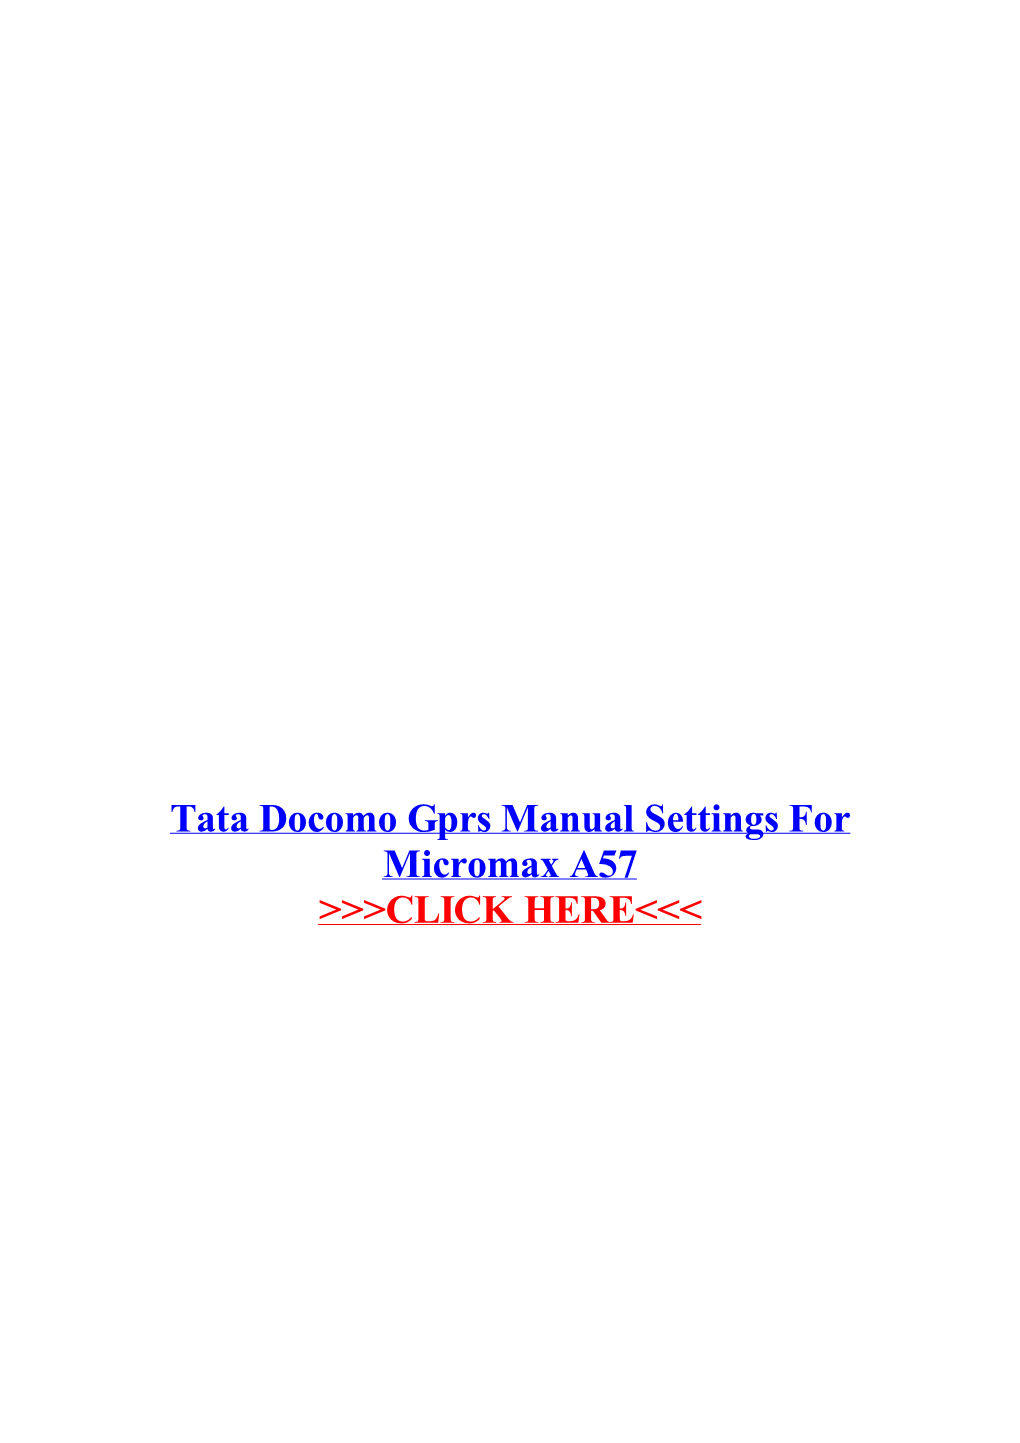 Tata Docomo Gprs Manual Settings for Micromax A57.Pdf